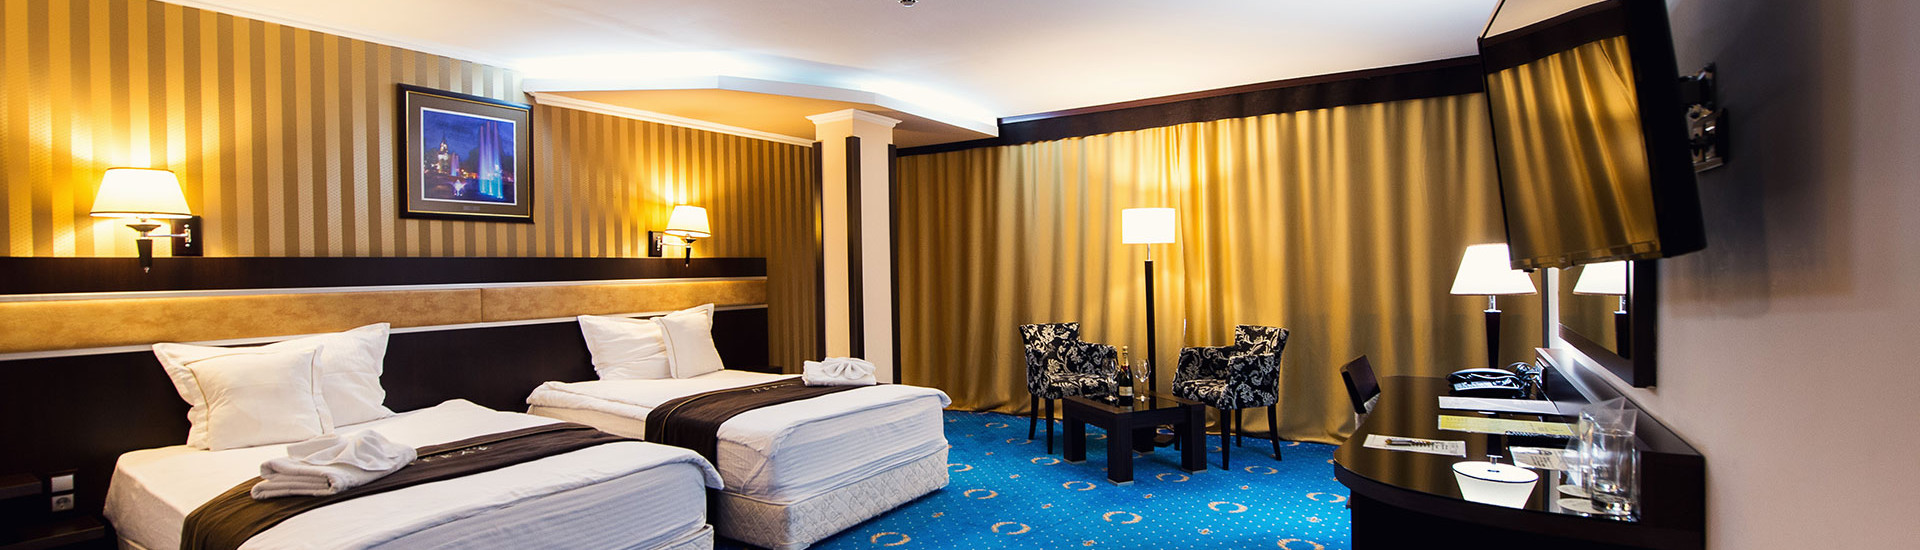 Grand Hotel Hebar - Rooms